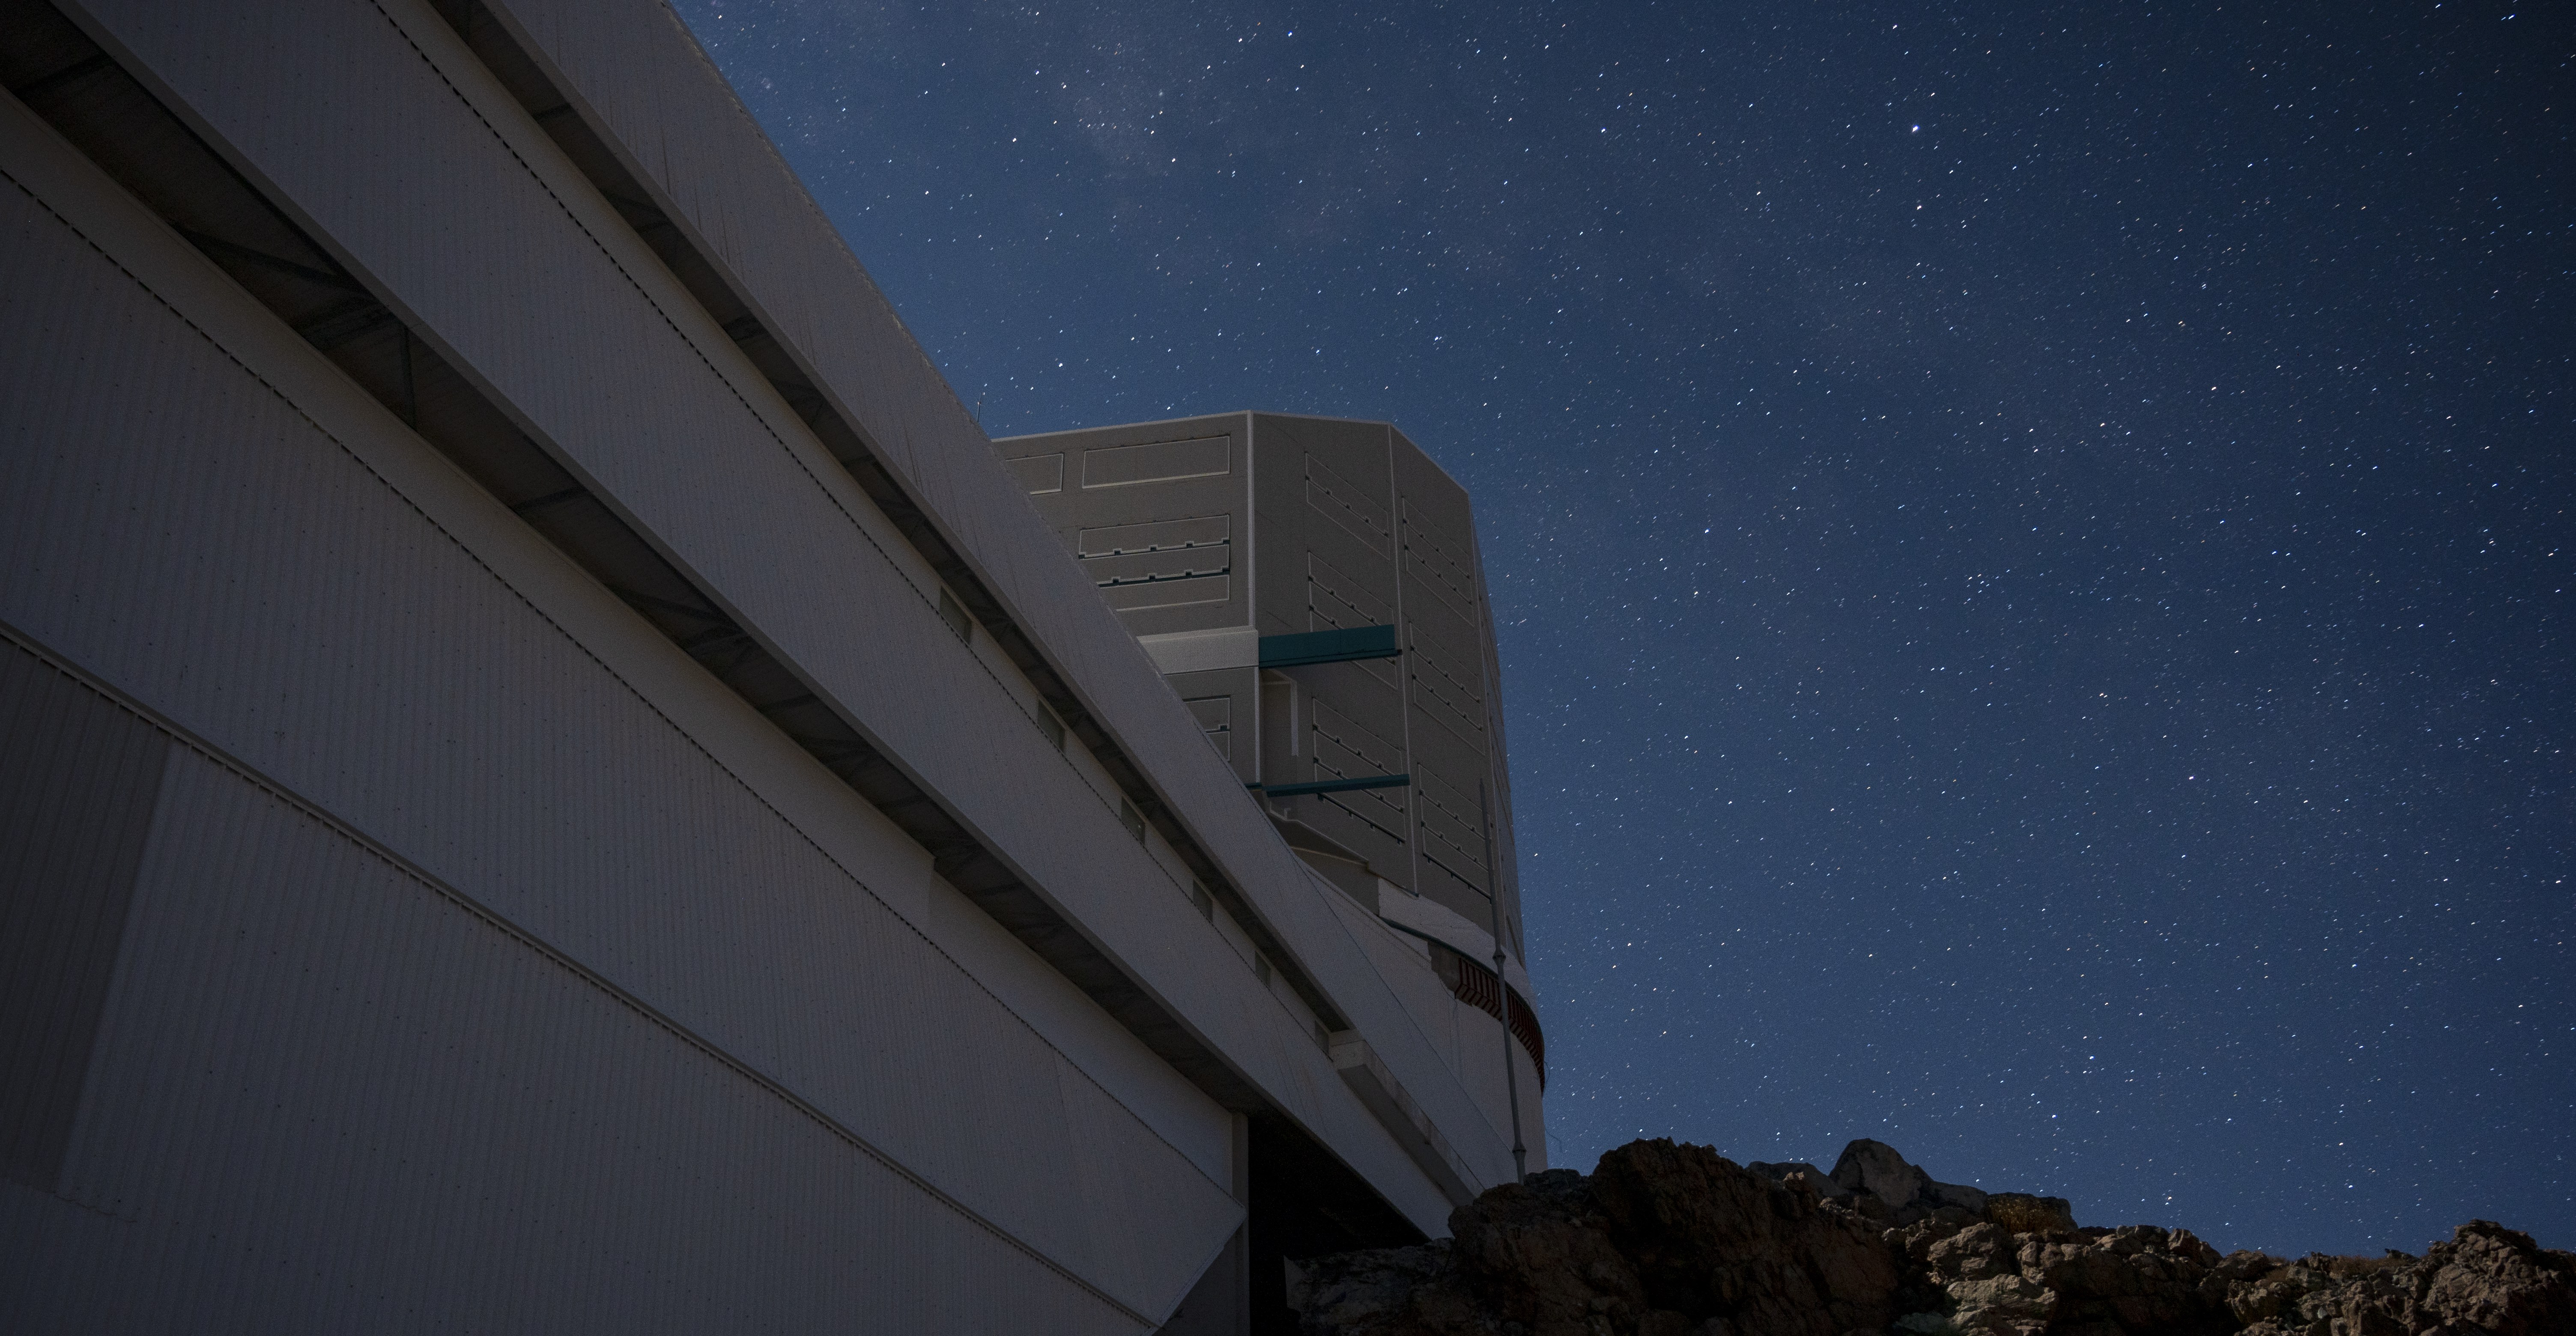 Rubin Observatory's Simonyi Survey Telescope within the dome